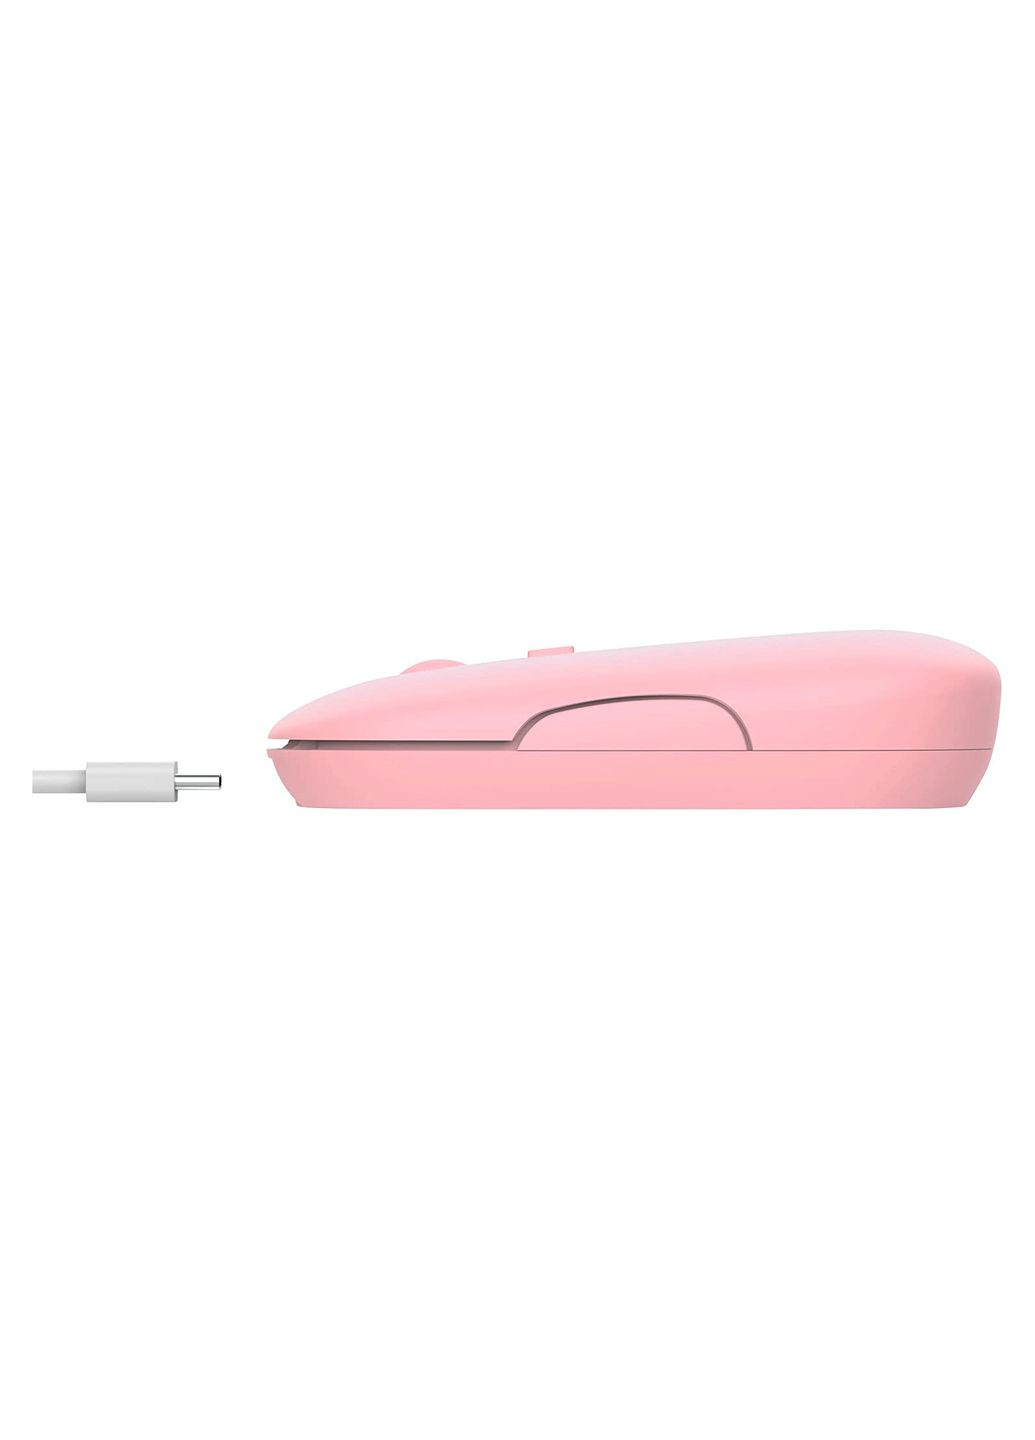 Мишка (24125) Trust puck wireless/bluetooth silent pink (268141439)